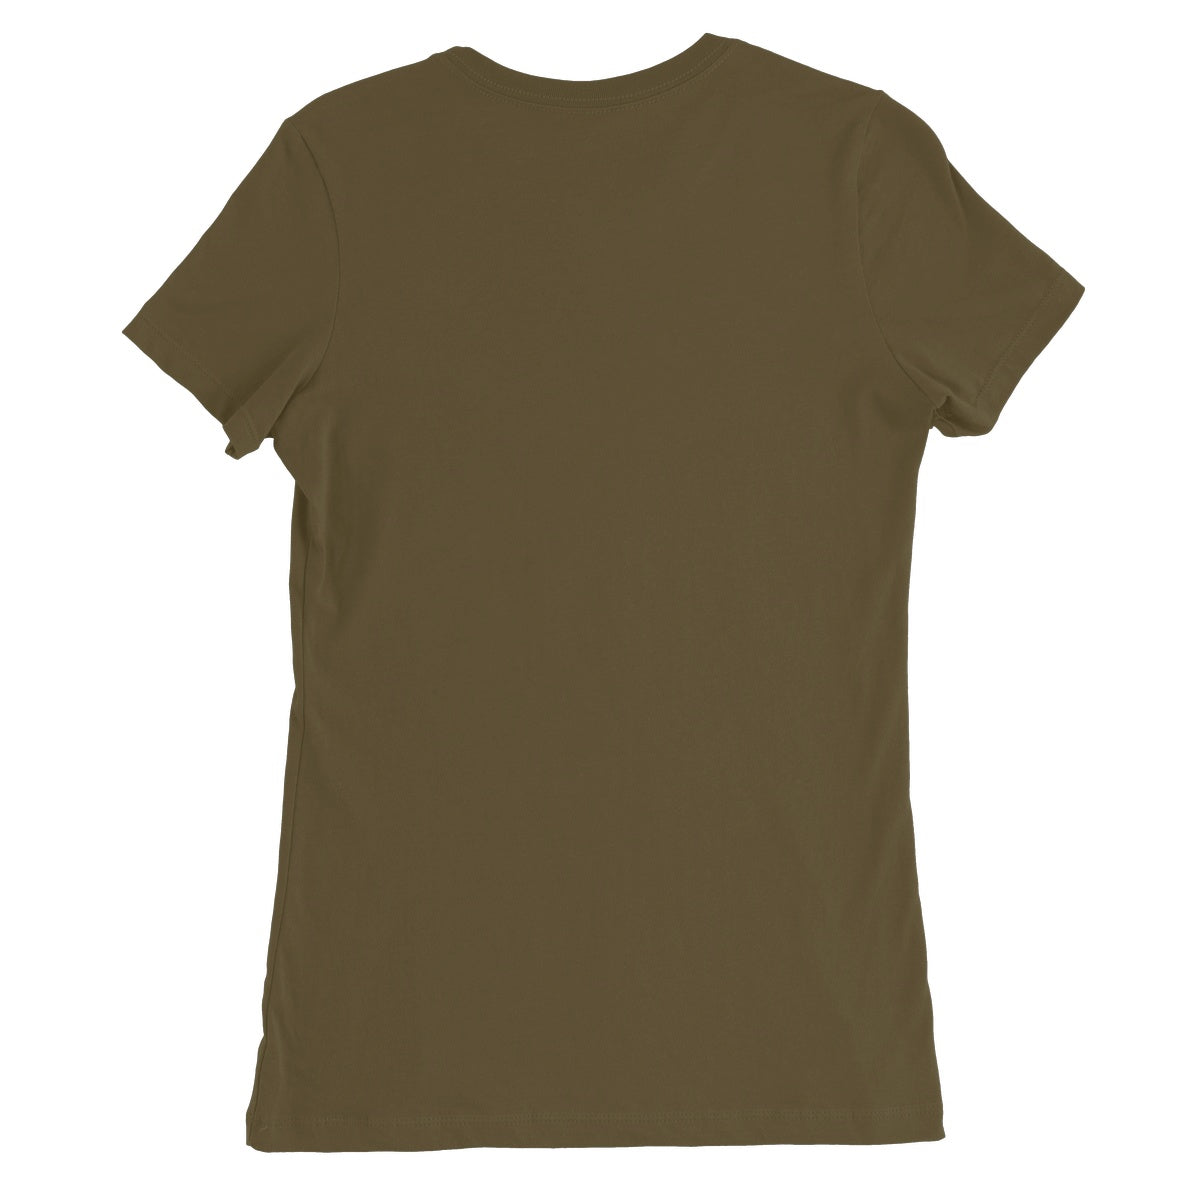 Möbius Flow, Pond Sphere Women's Favourite T-Shirt